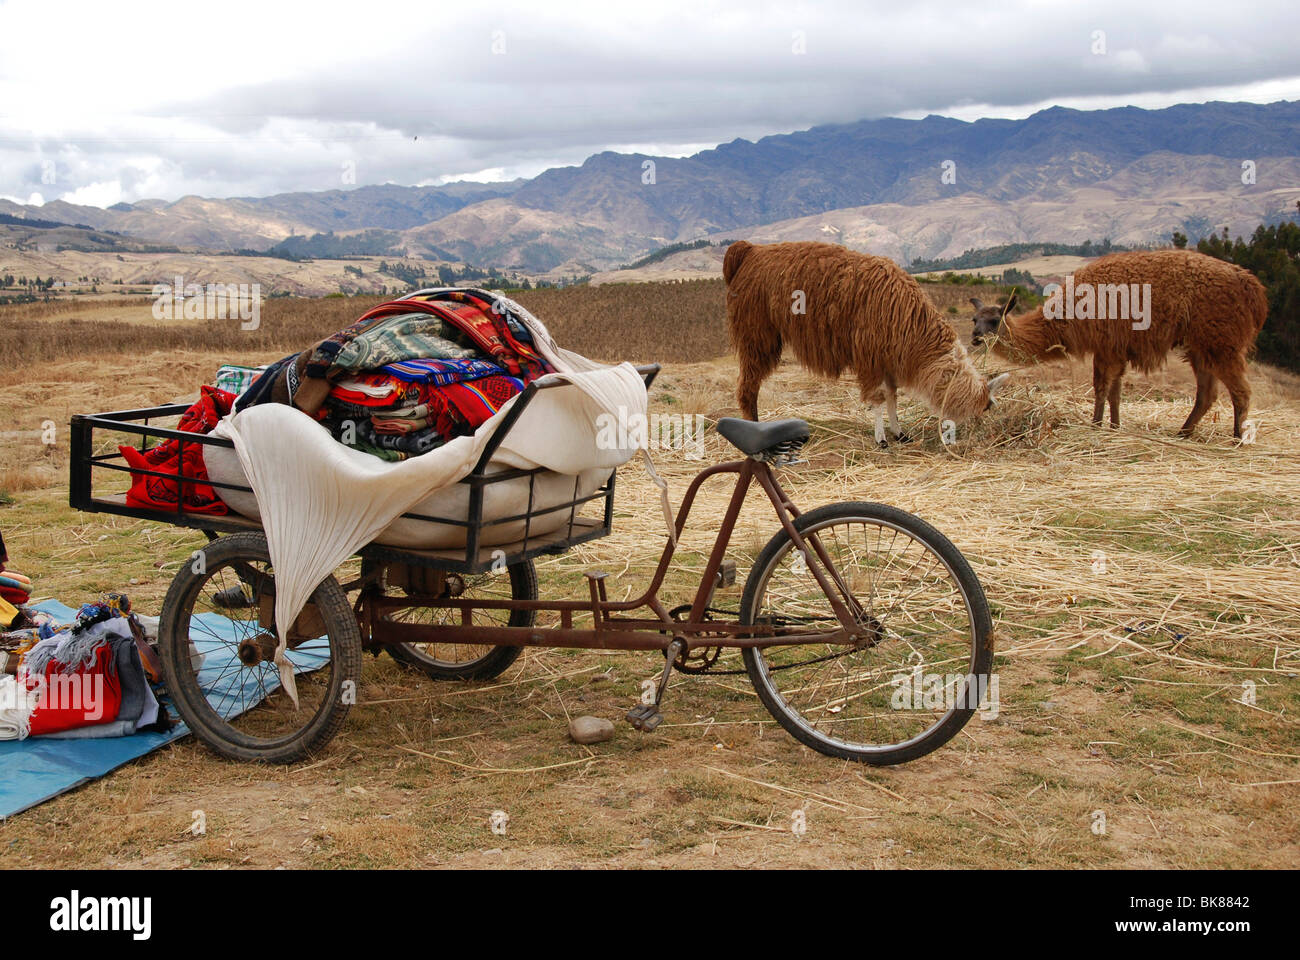 Two llamas and a bicycle, Huilahuila, Peru, South America, Latin America Stock Photo